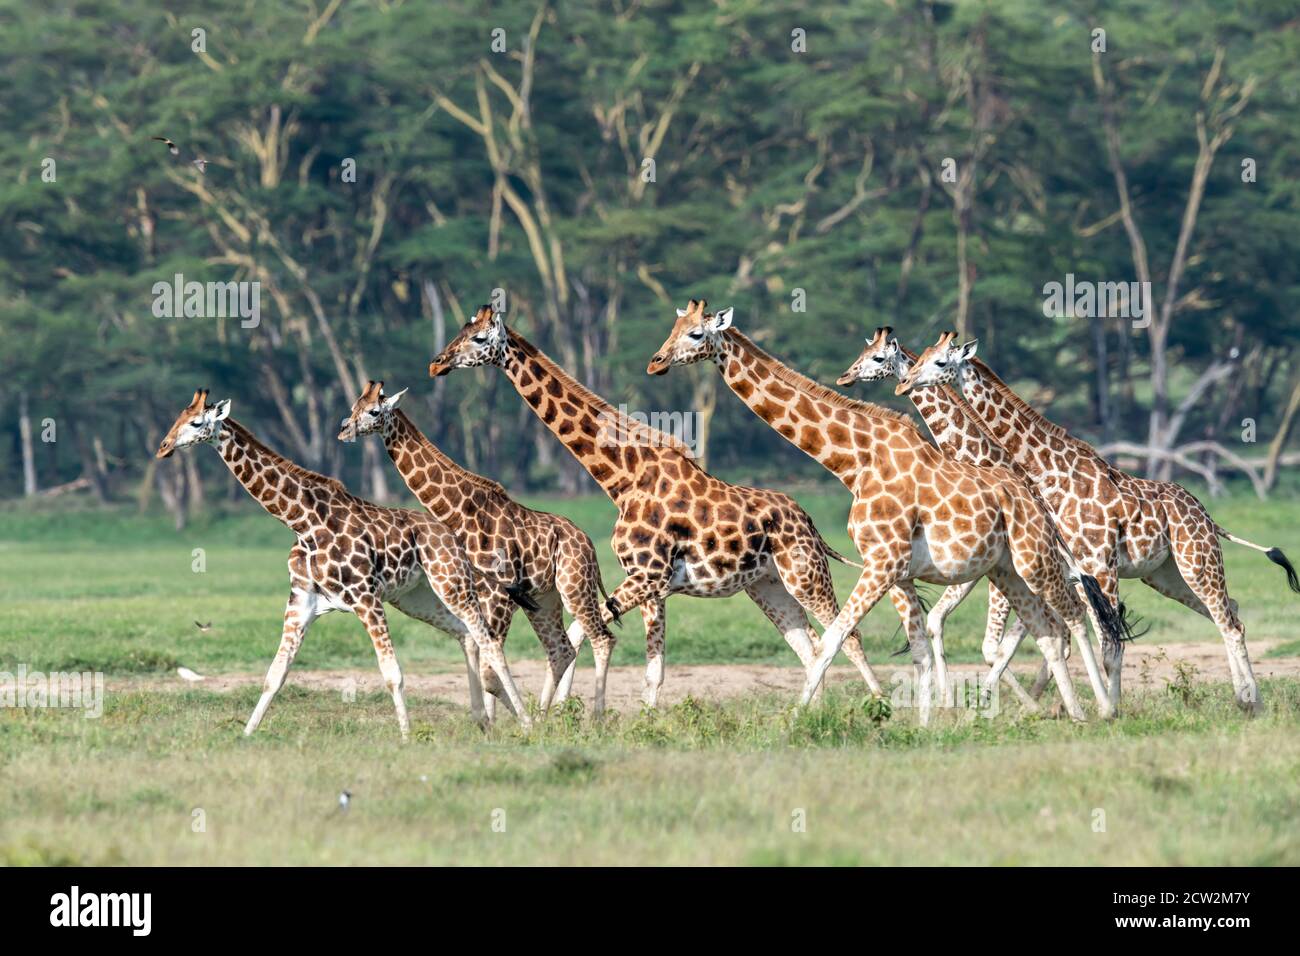 Endangered Reticulated giraffe(s) (Giraffa camelopardalis) in Kenya, Africa Stock Photo